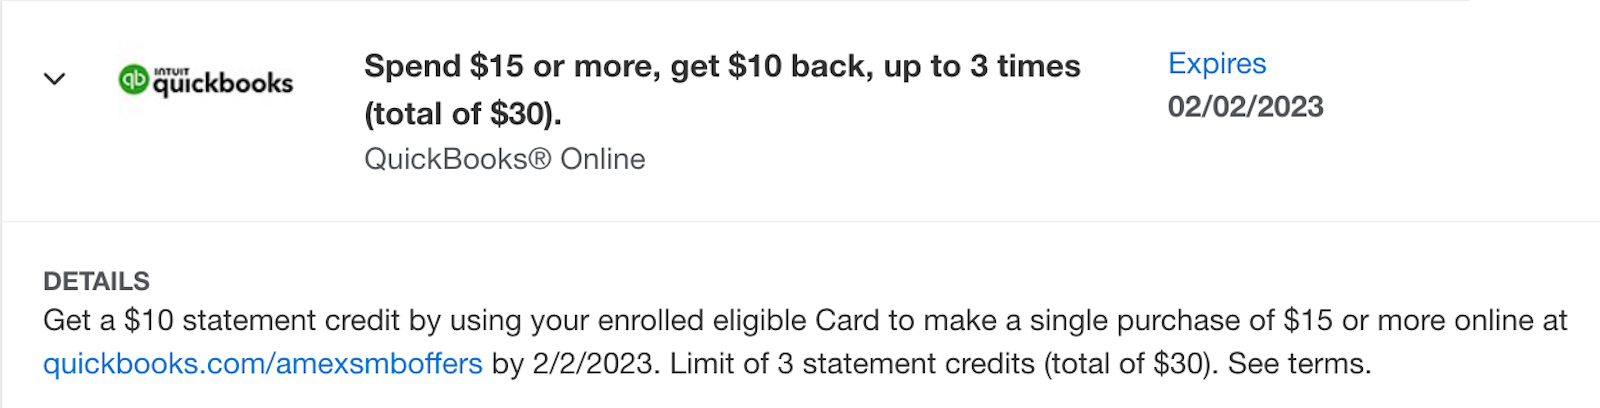 details of a rebate offer for credit card spending